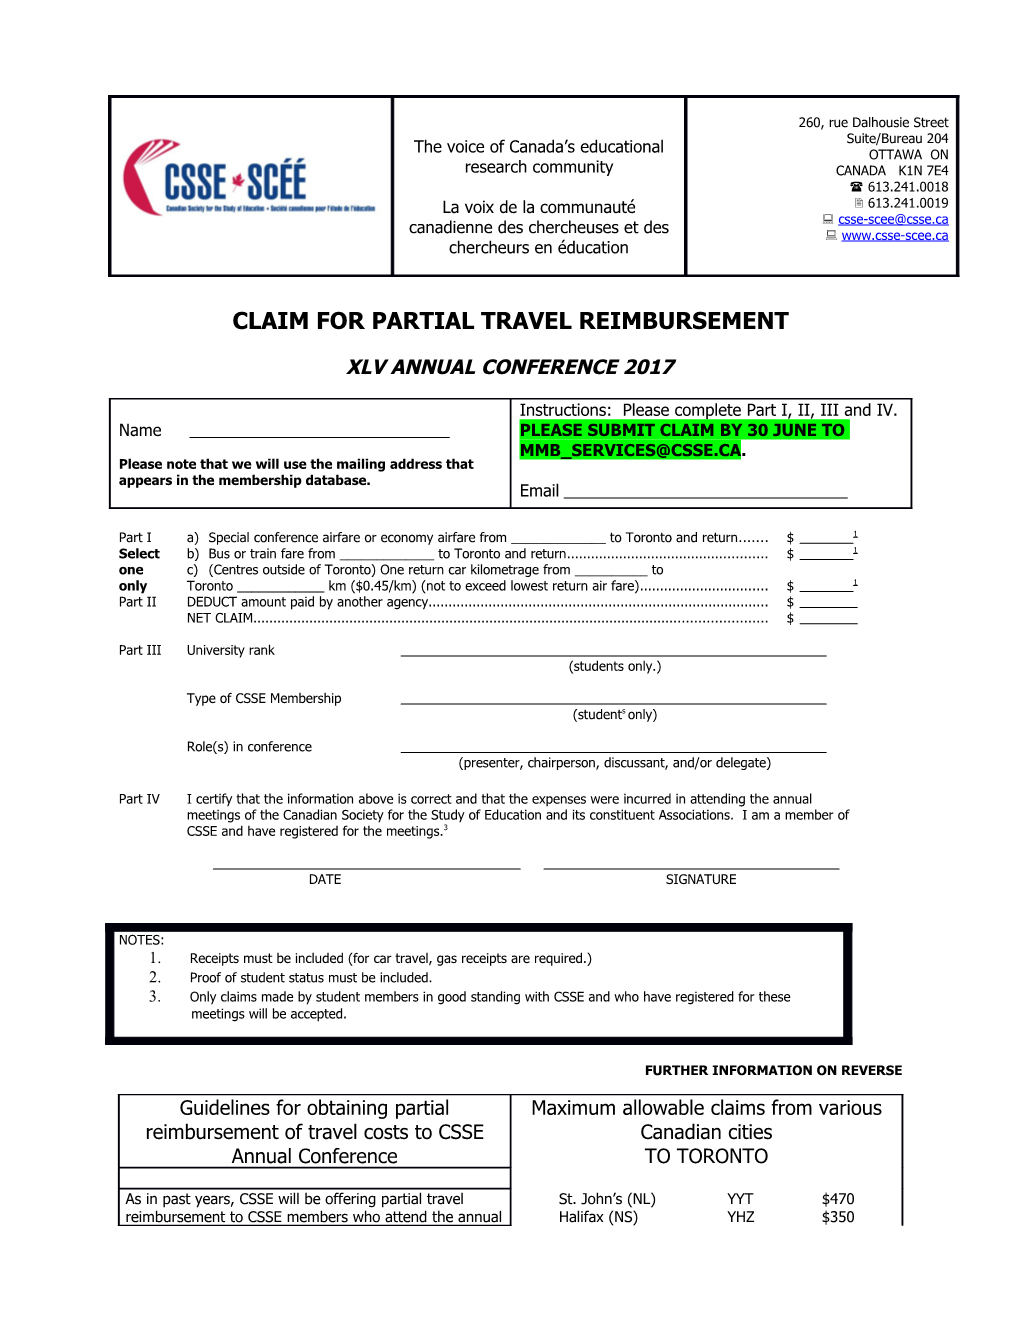 Claim for Partial Travel Reimbursement